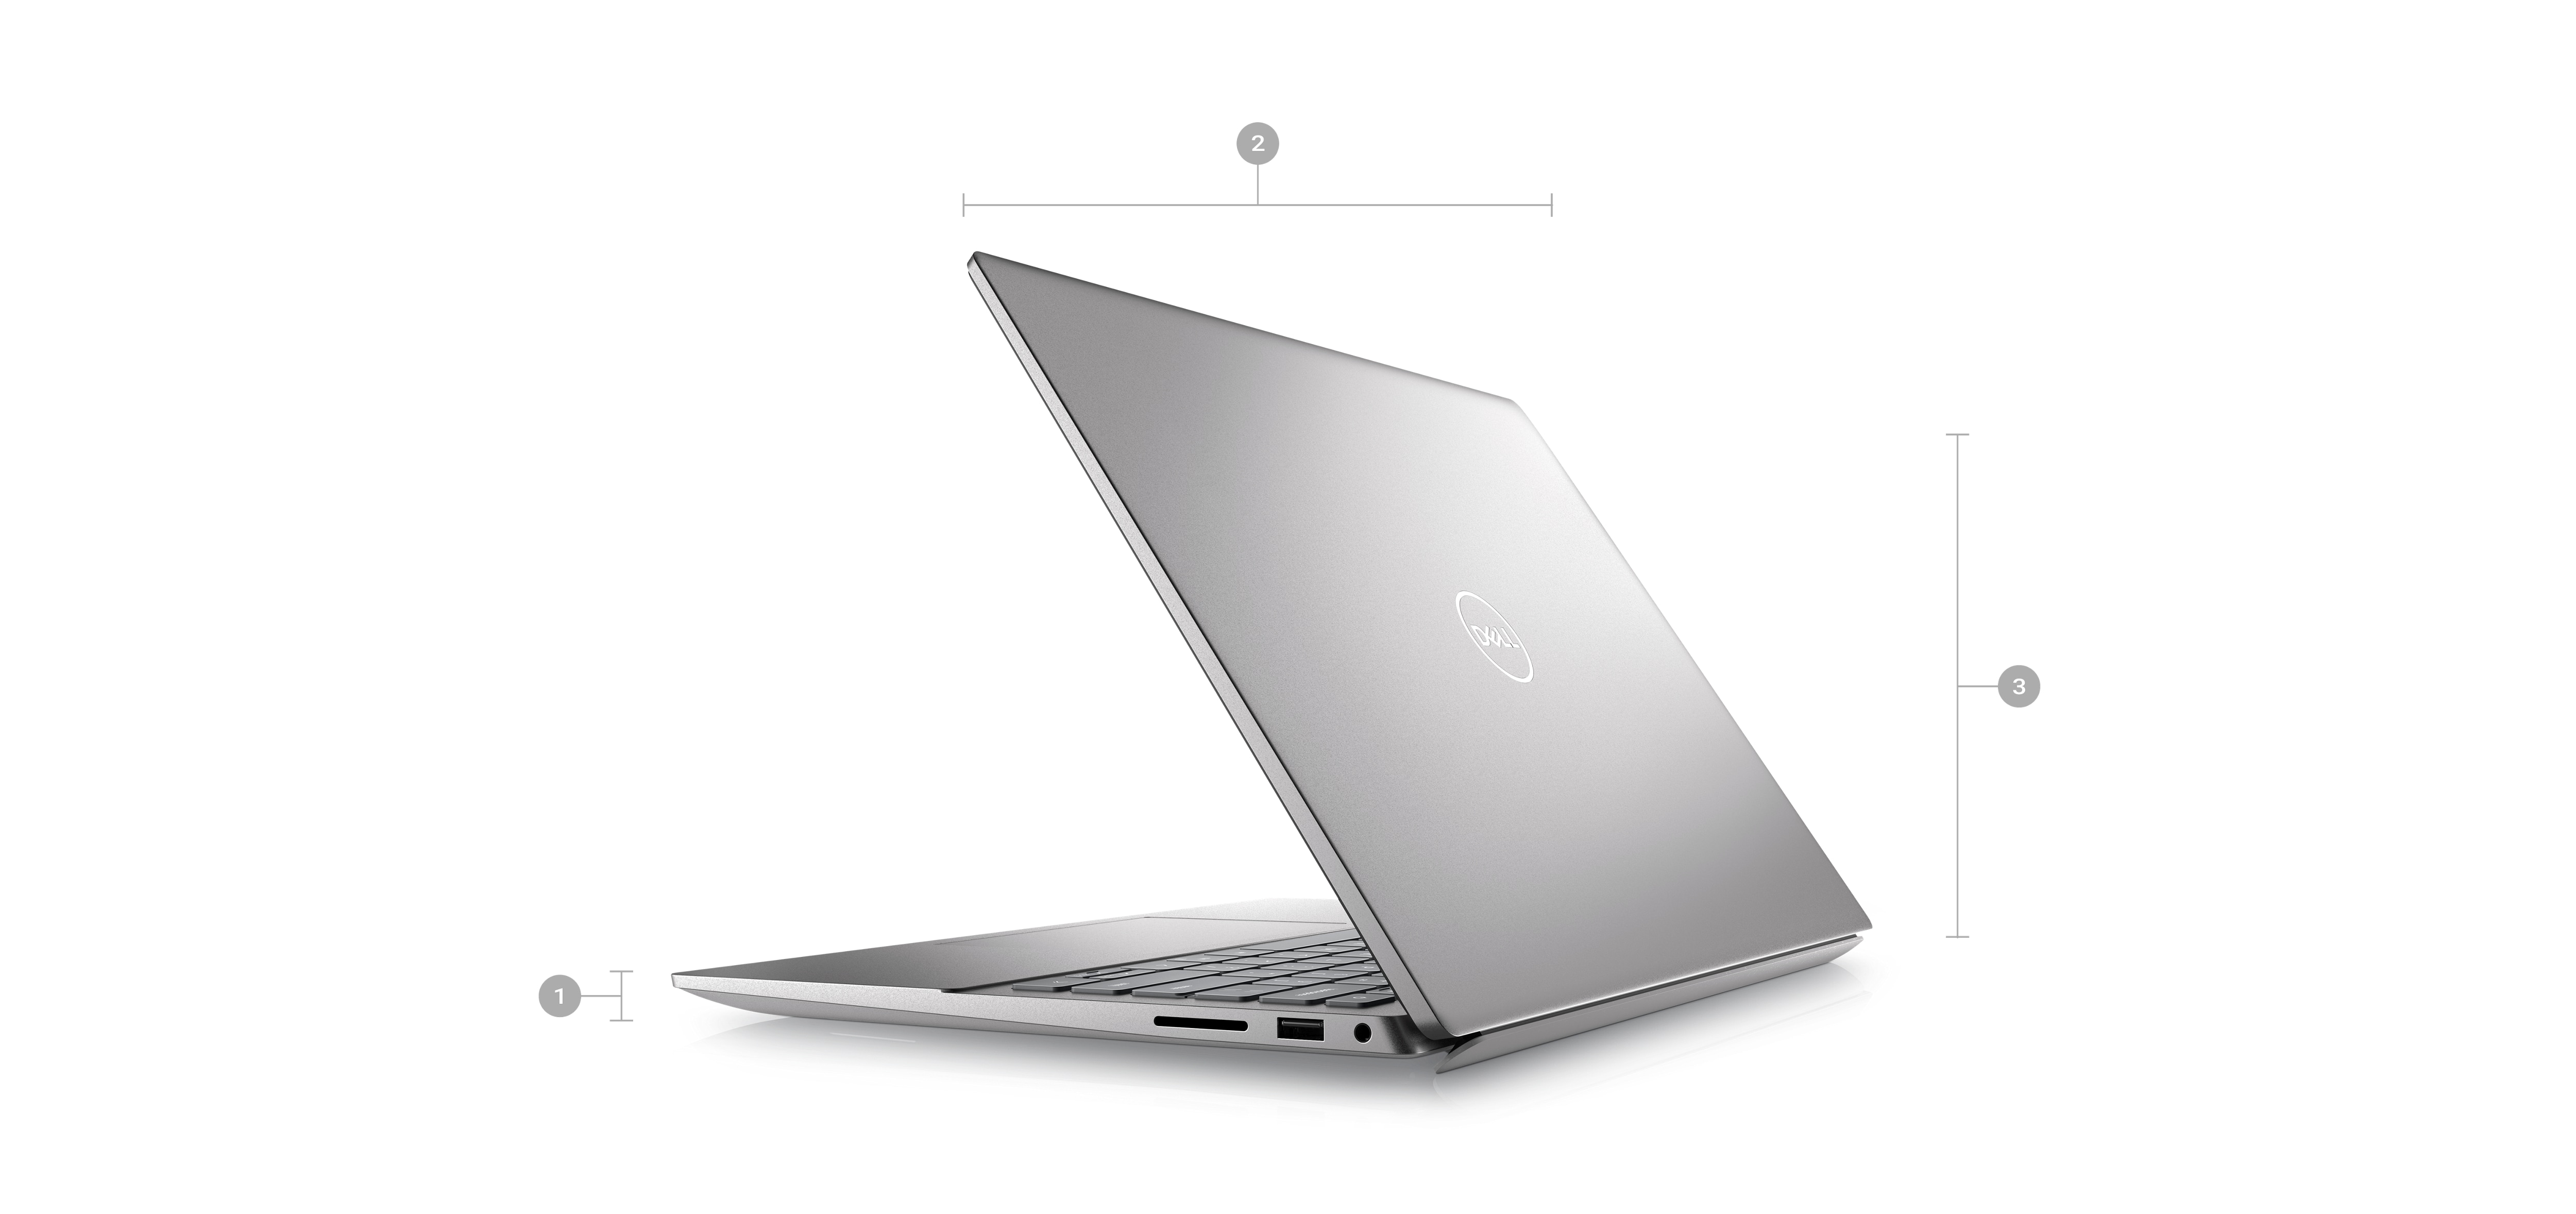 Inspiron 14 Laptop | Dell USA